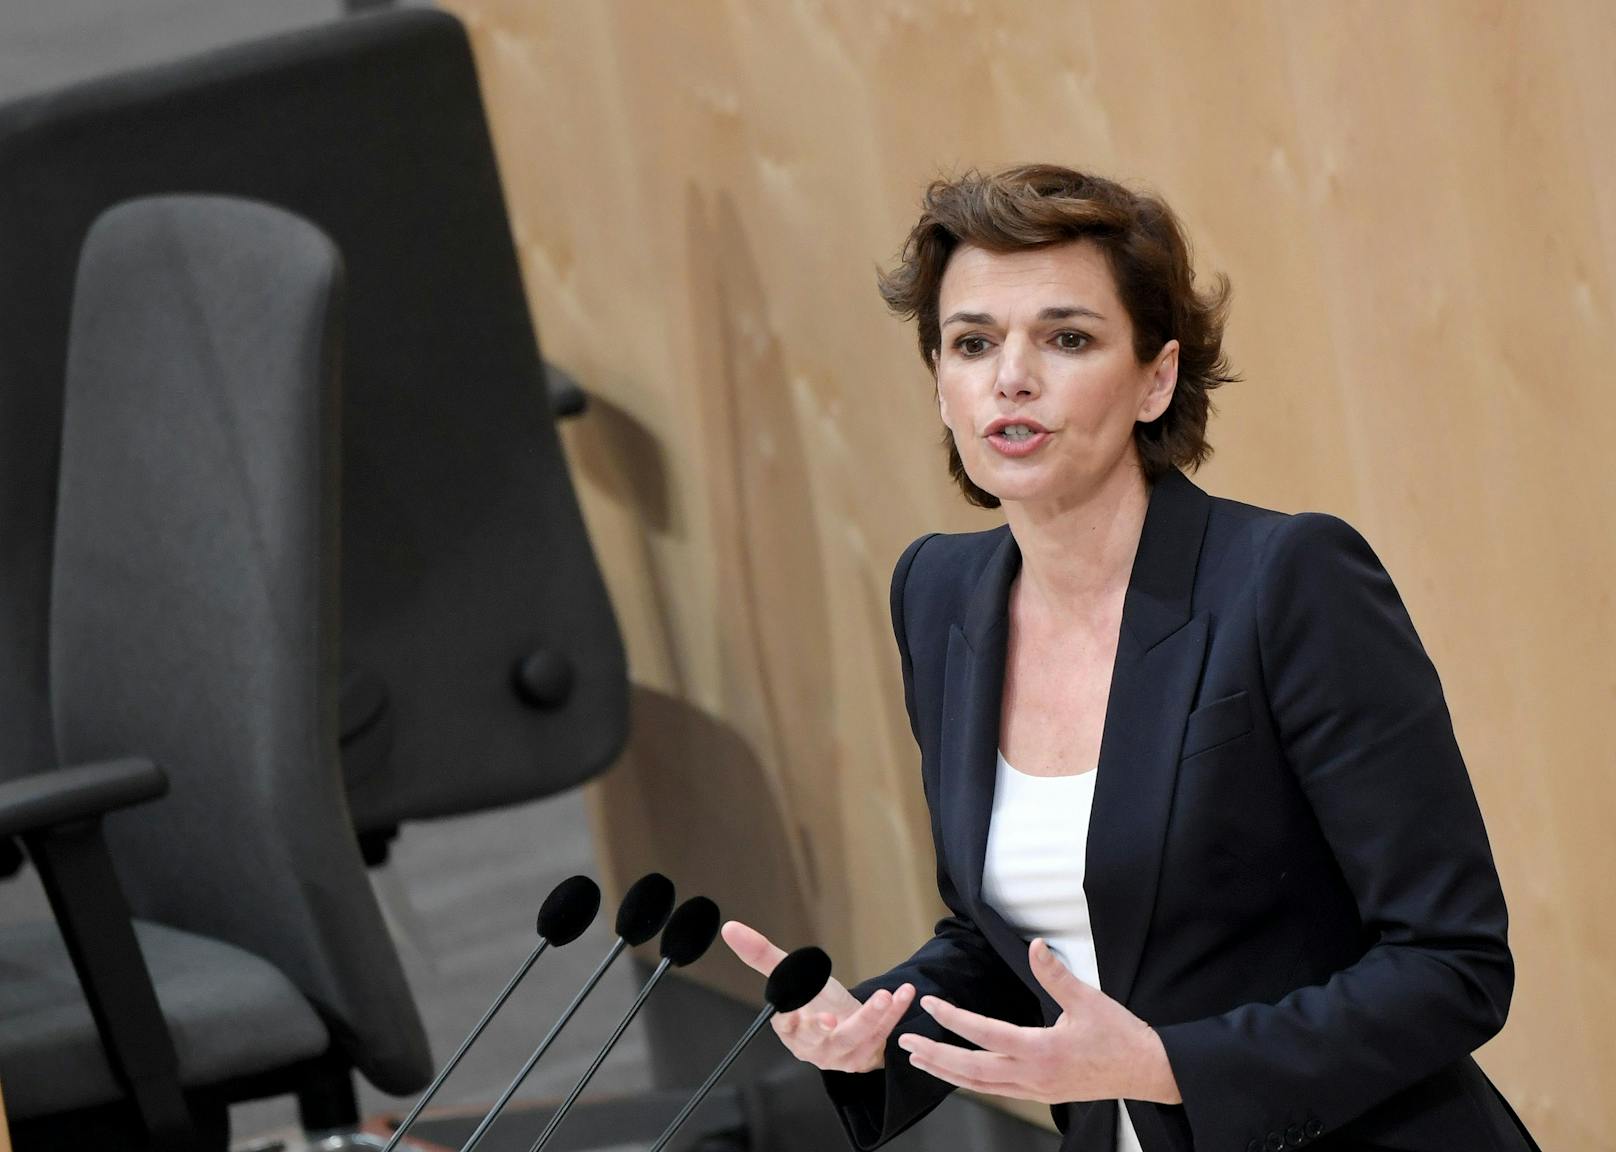 SPÖ-Chefin Pamela Rendi-Wagner.